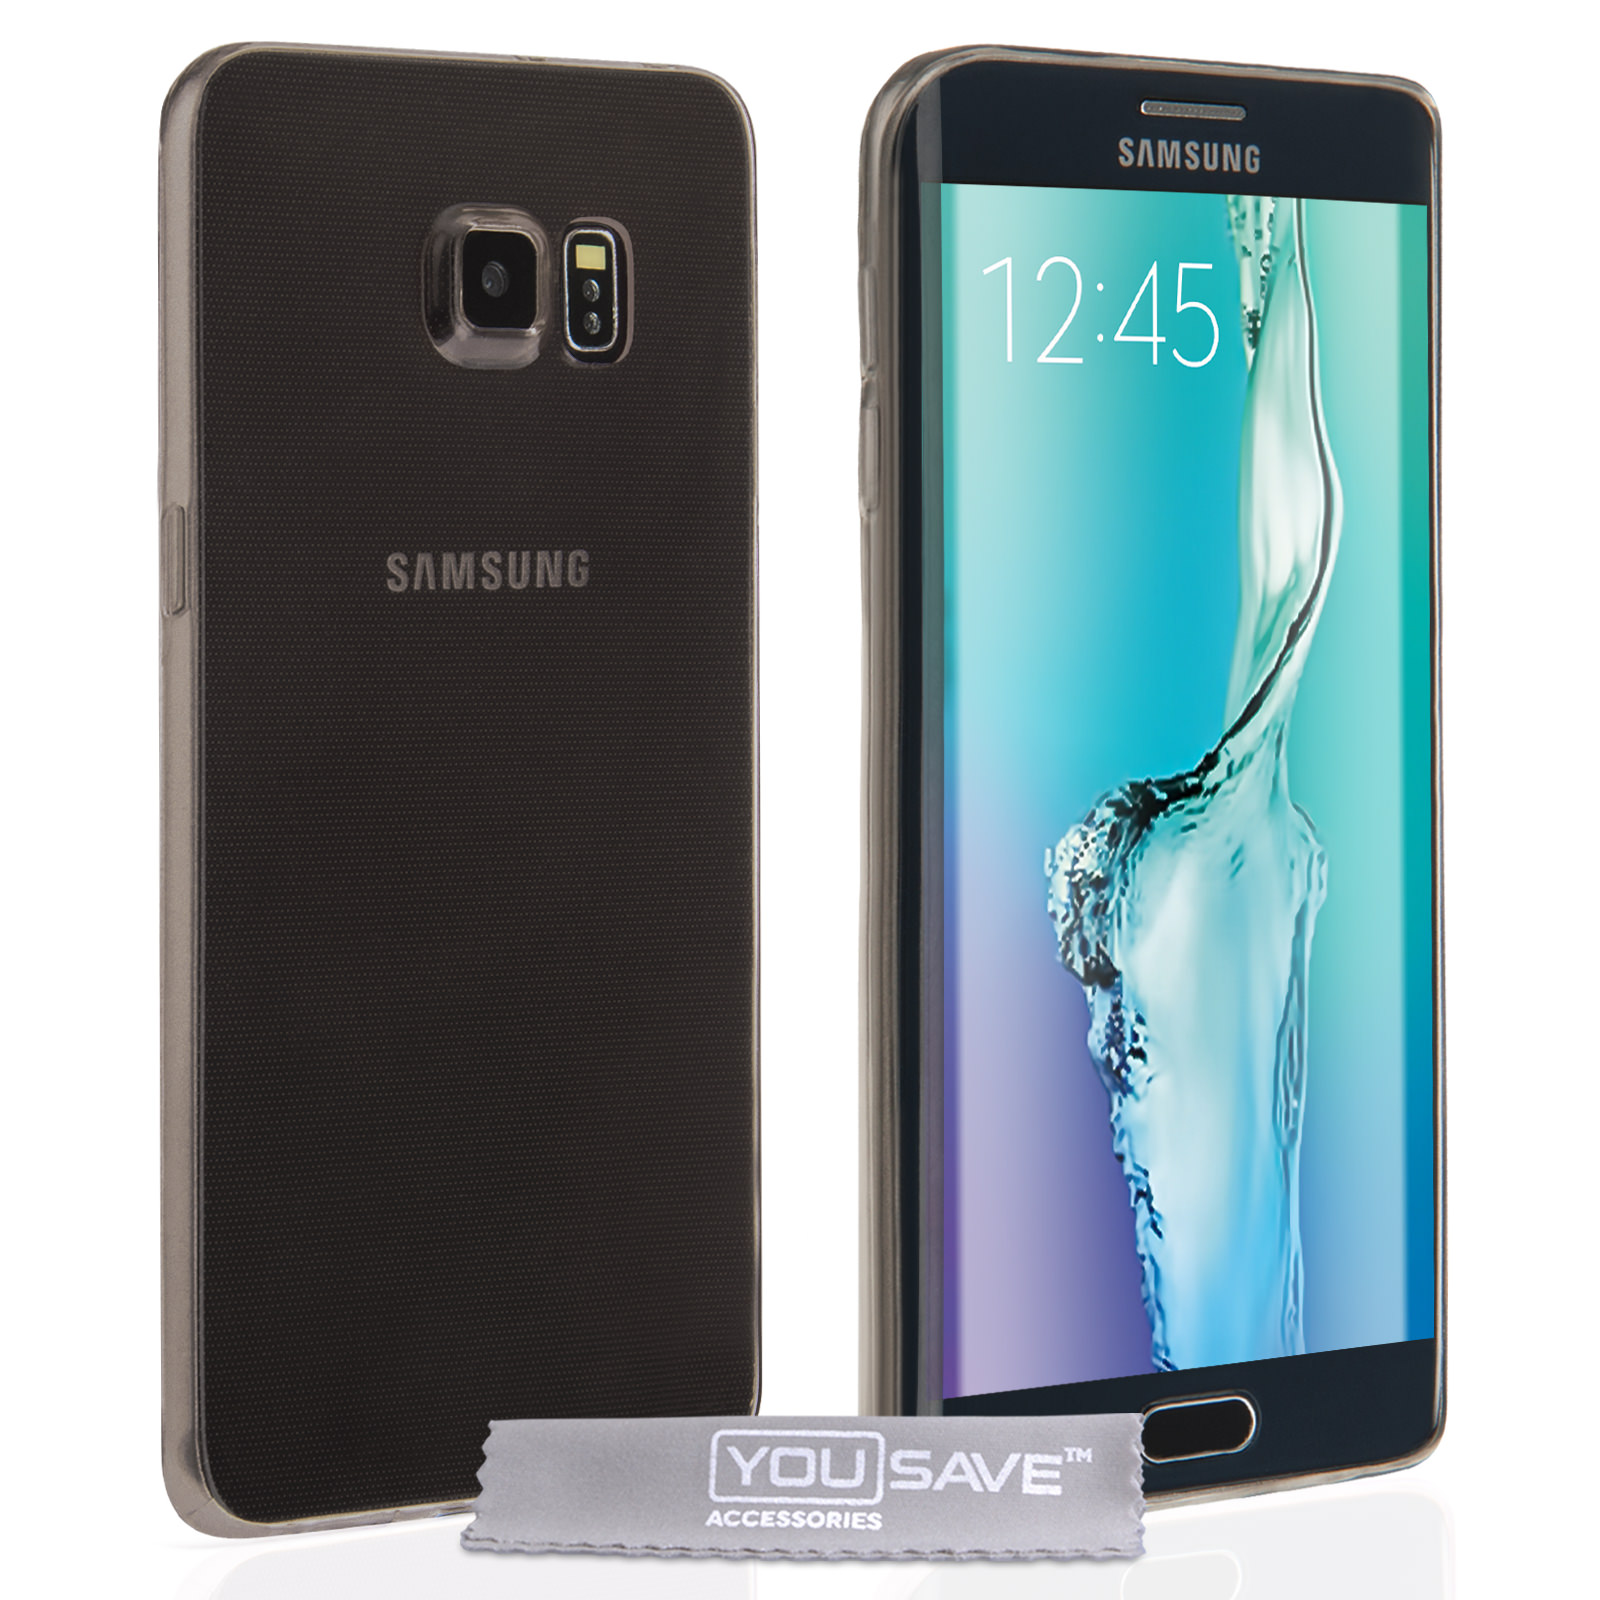 Yousave Accessories Samsung Galaxy S6 Edge Plus Ultra Thin Gel -Smoke Black Case